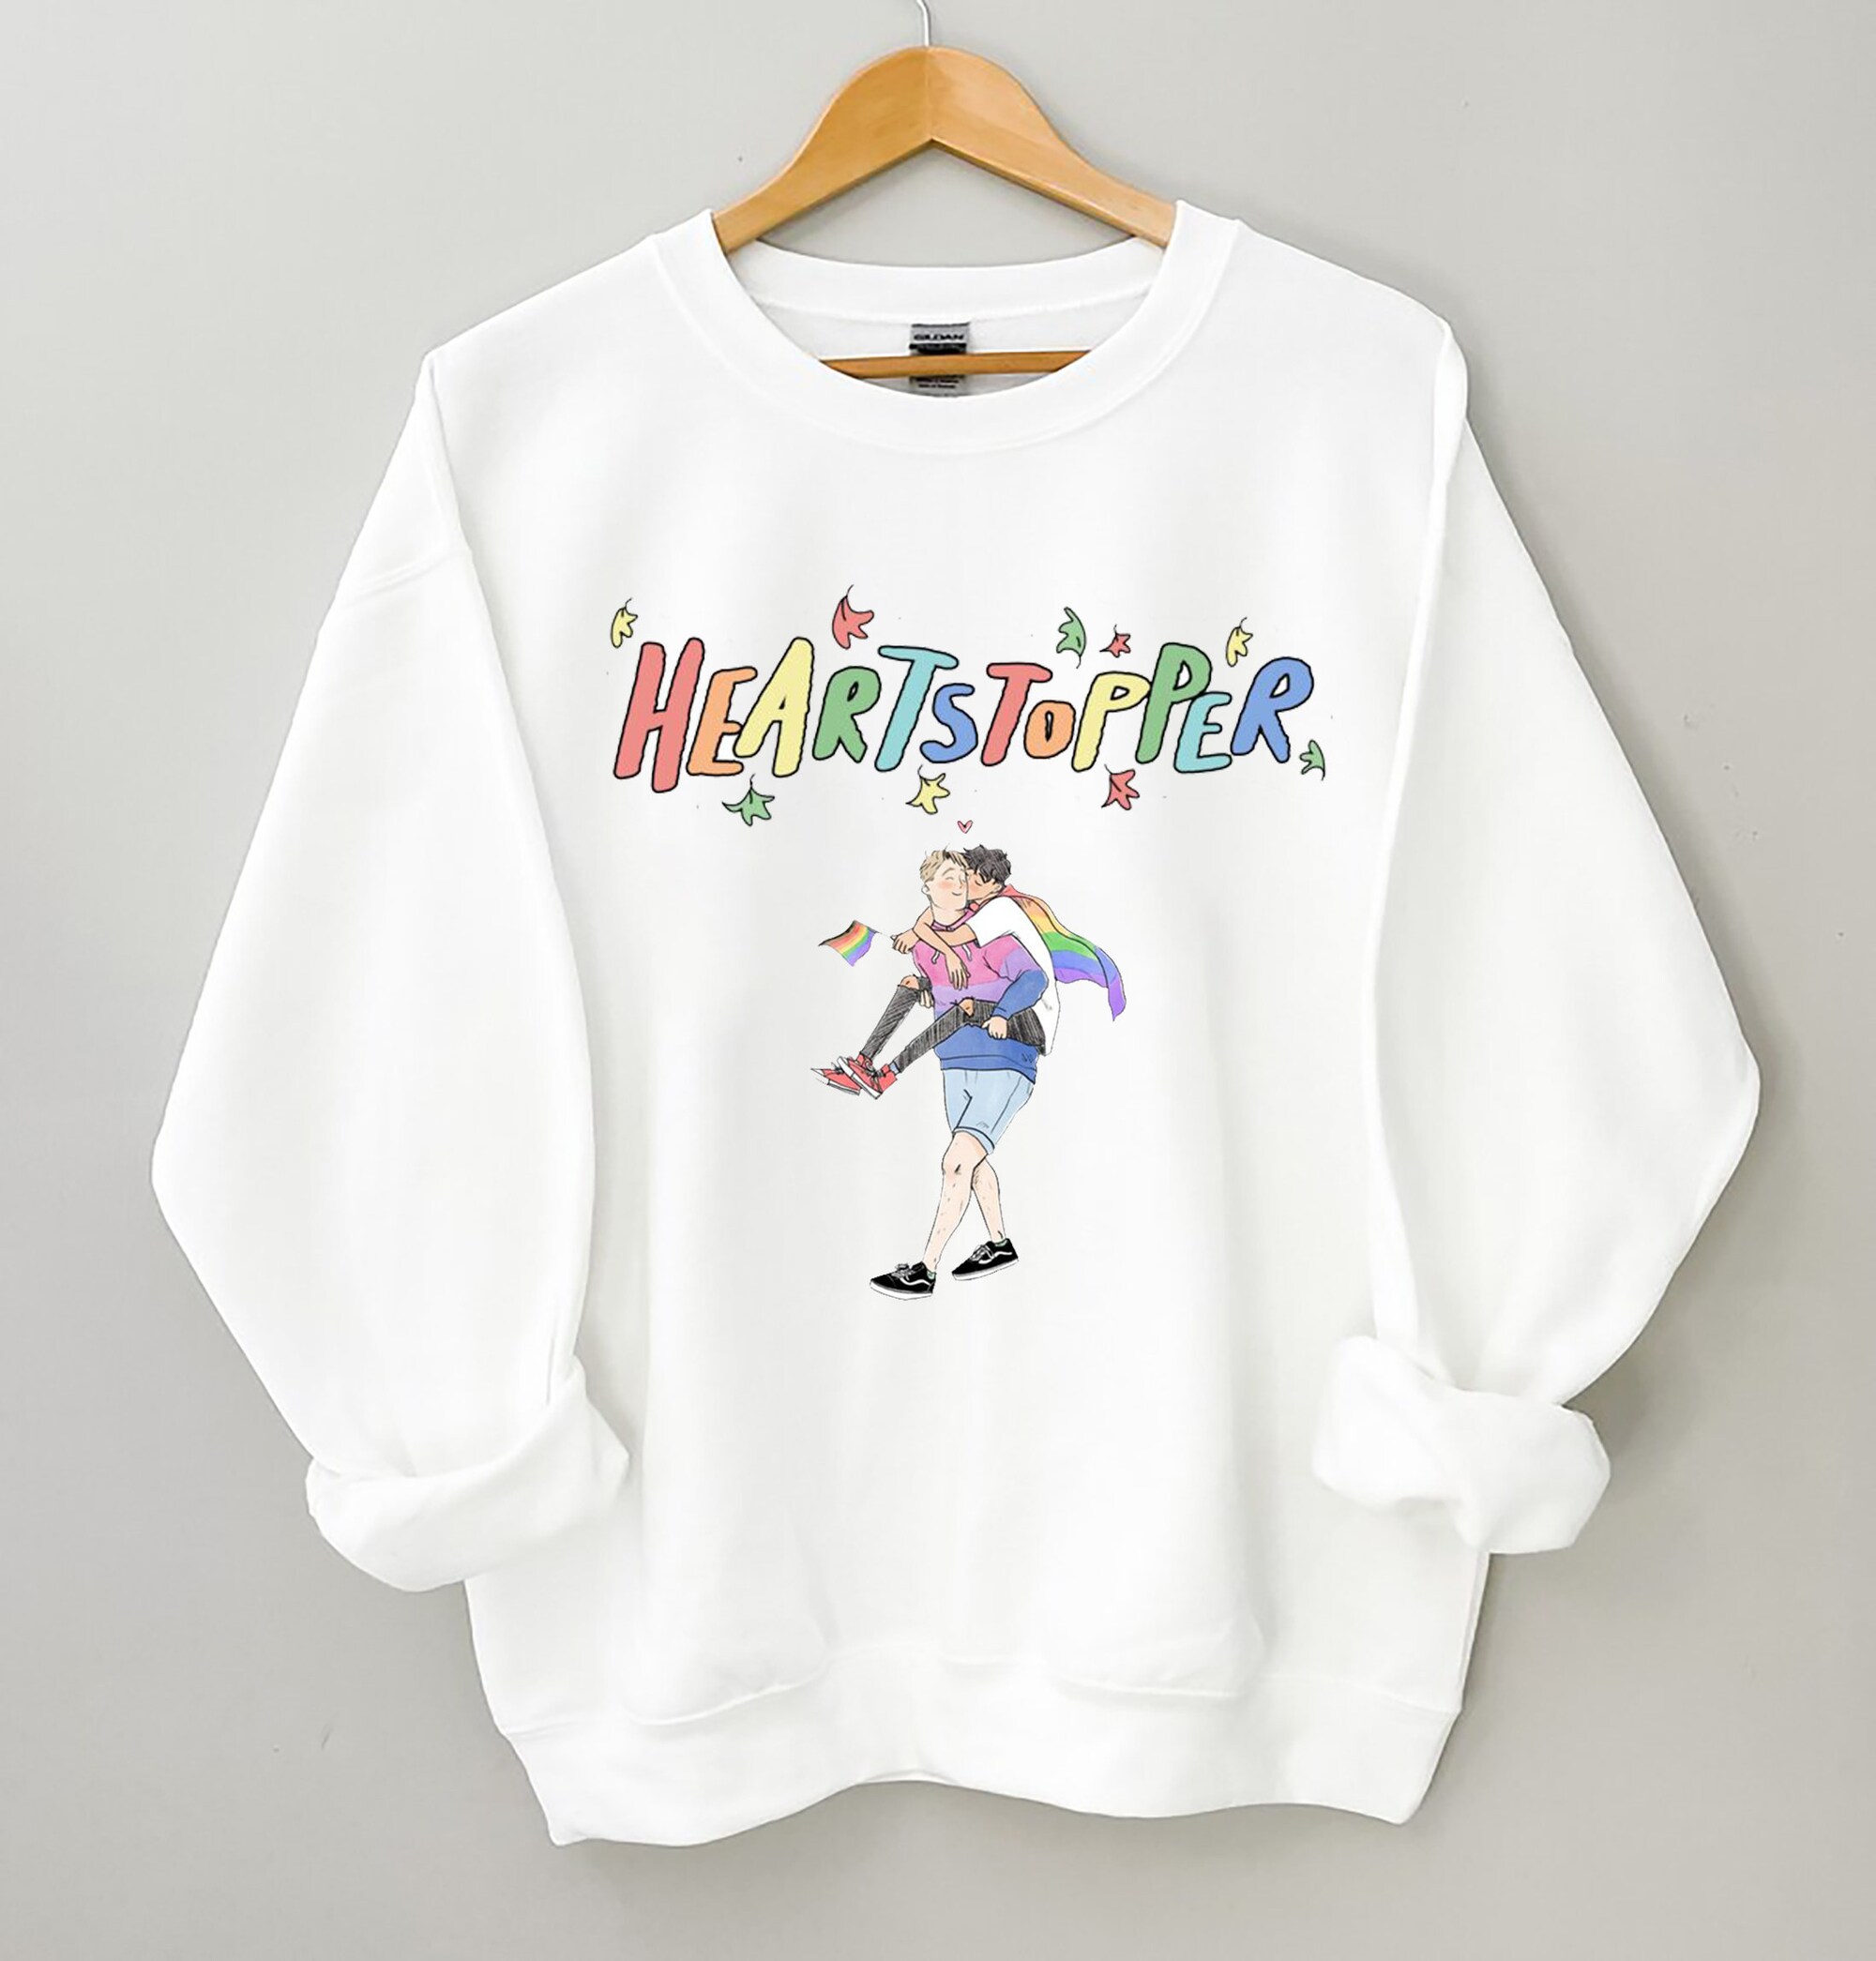 Nick And Charlie Heartstopper Sweatshirt, Heartstopper Rainbow